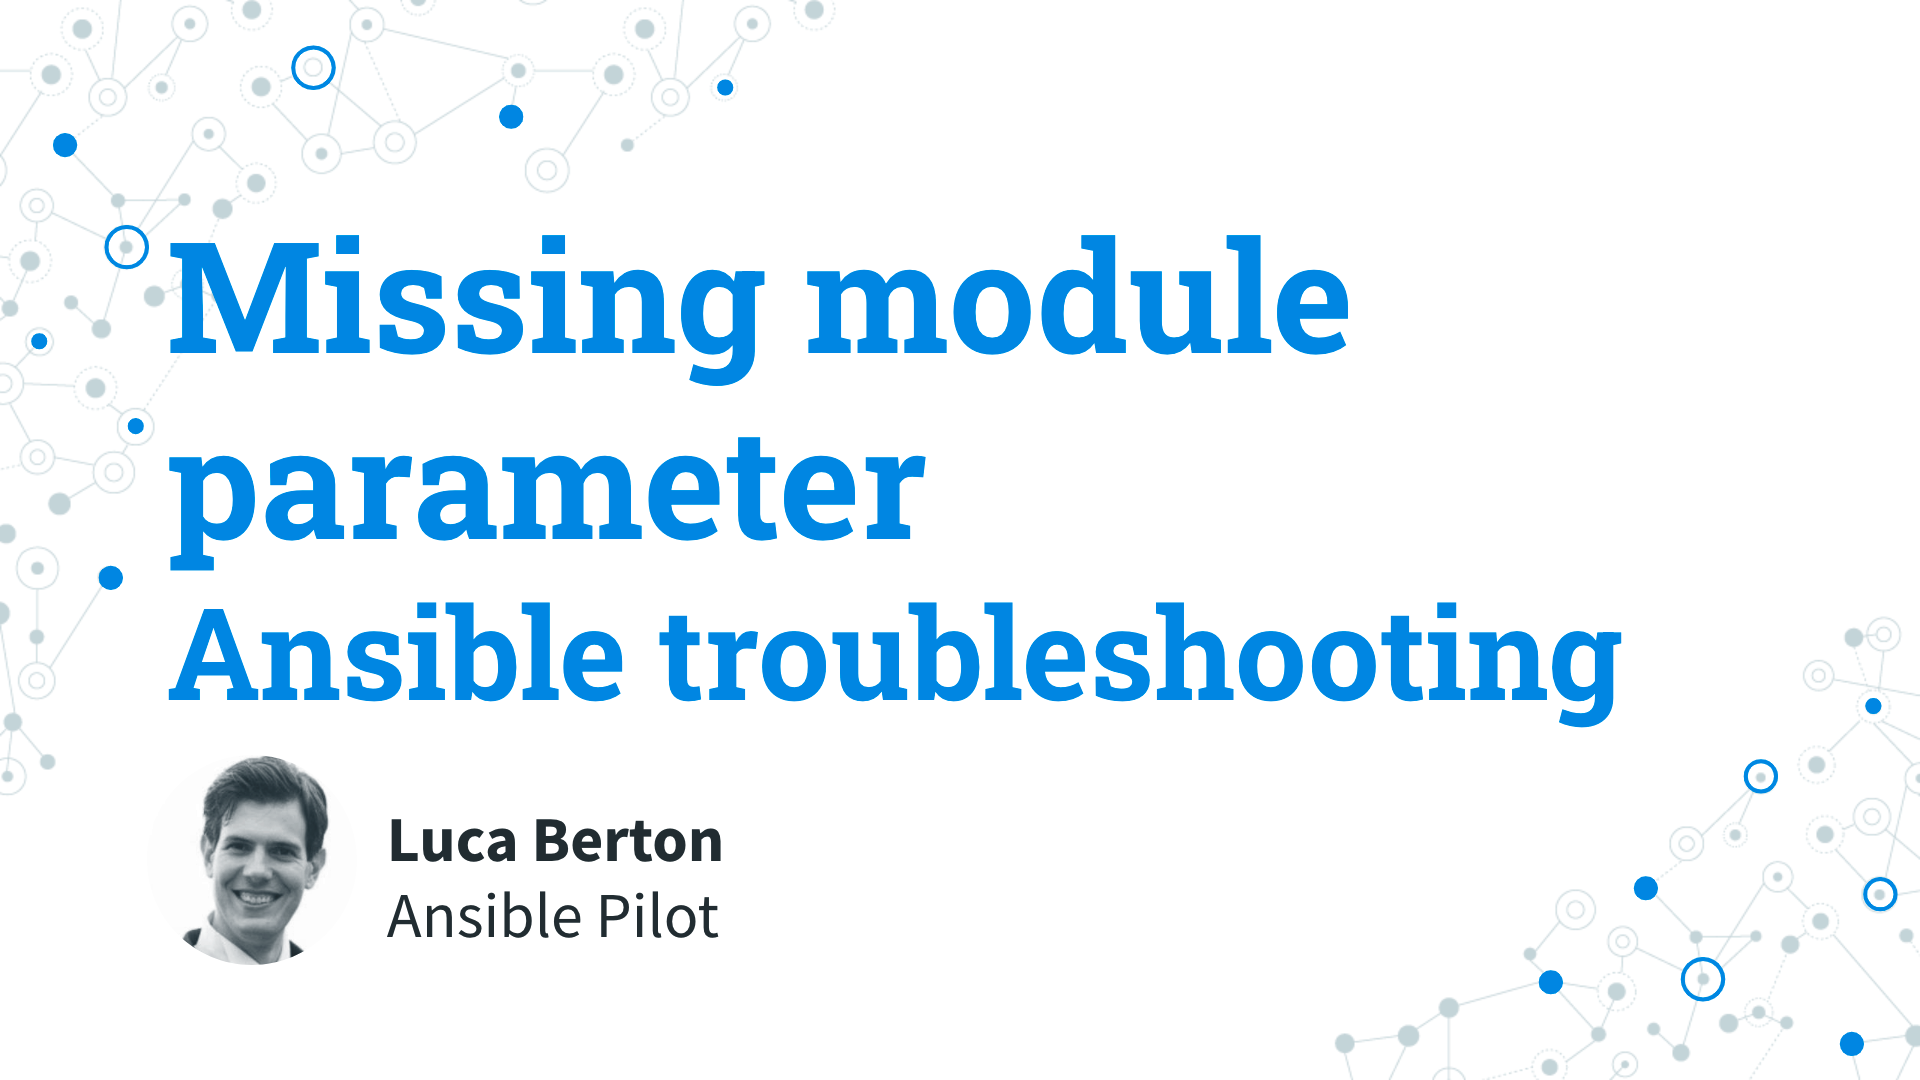 Ansible troubleshooting - missing module parameter